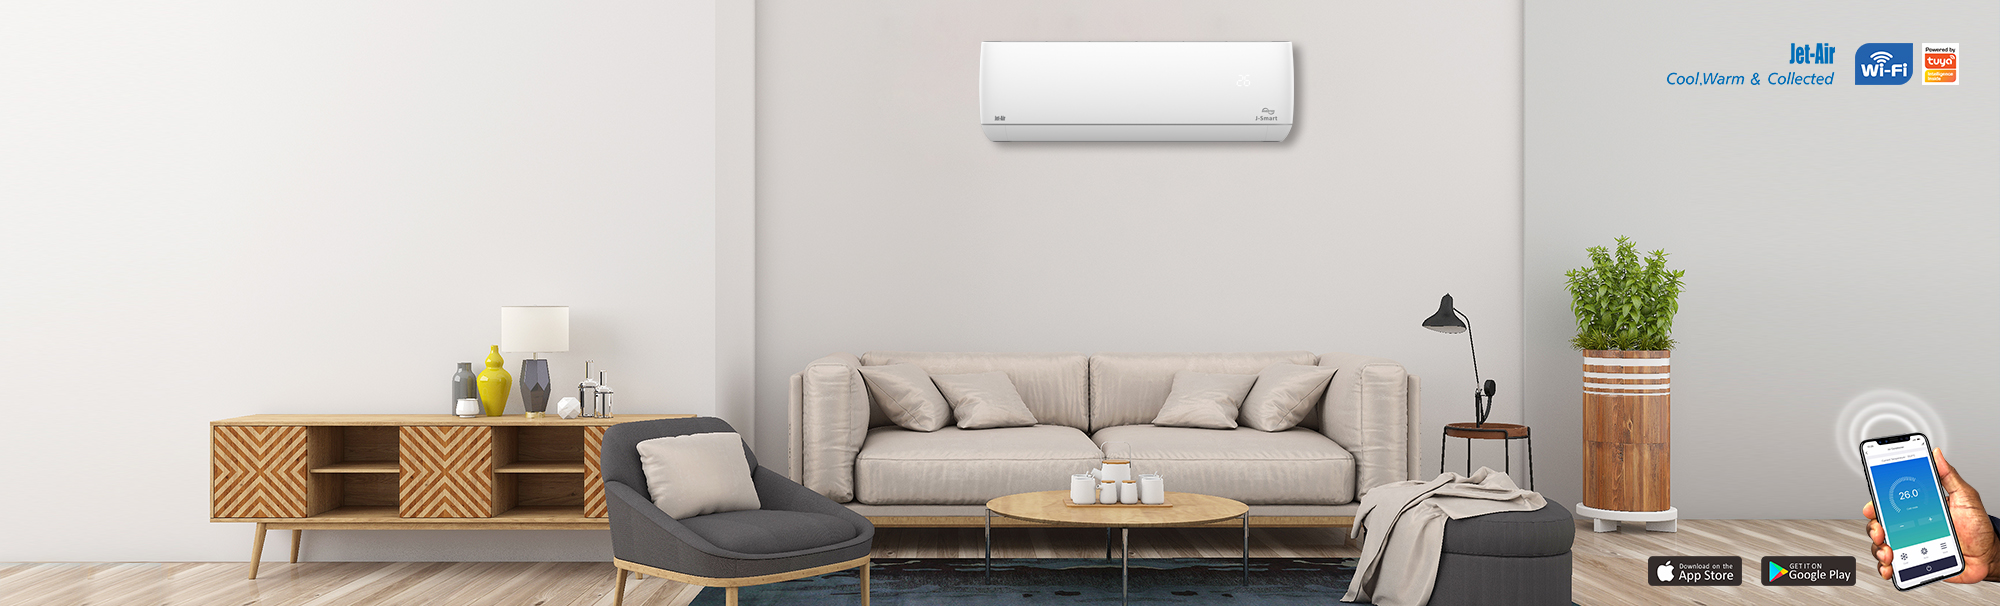 j-smart airconditioning